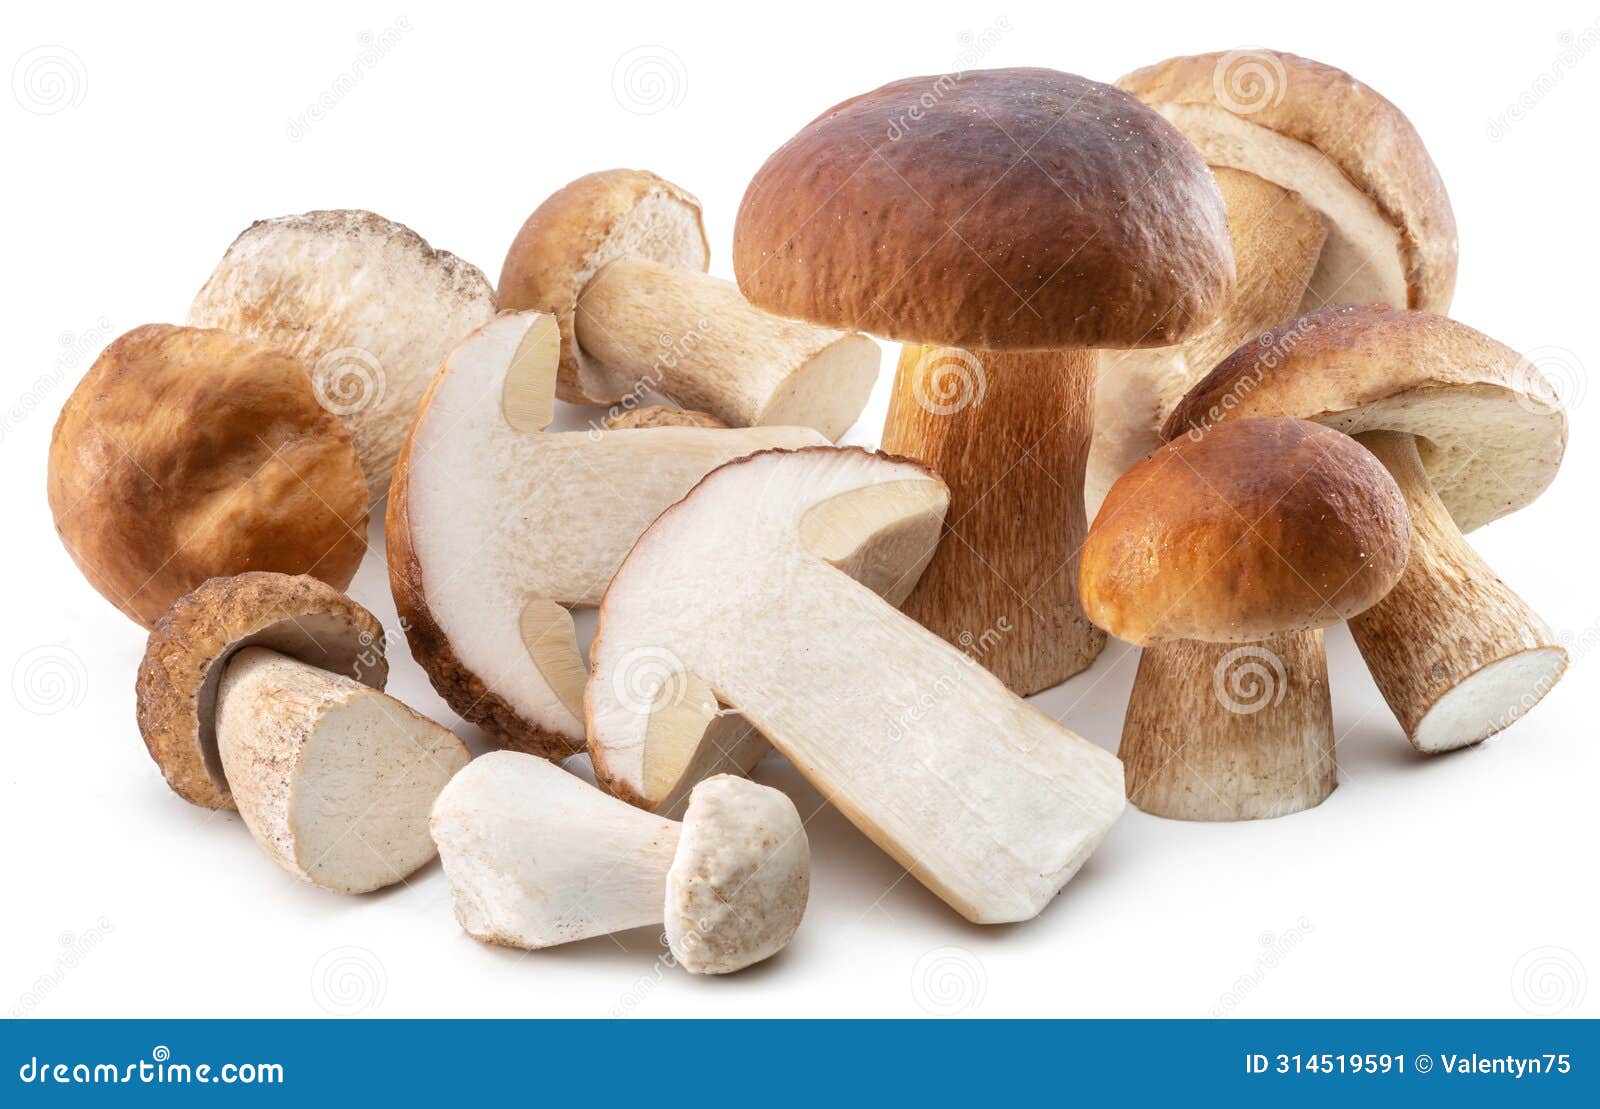 group of porcini mushrooms  on white background